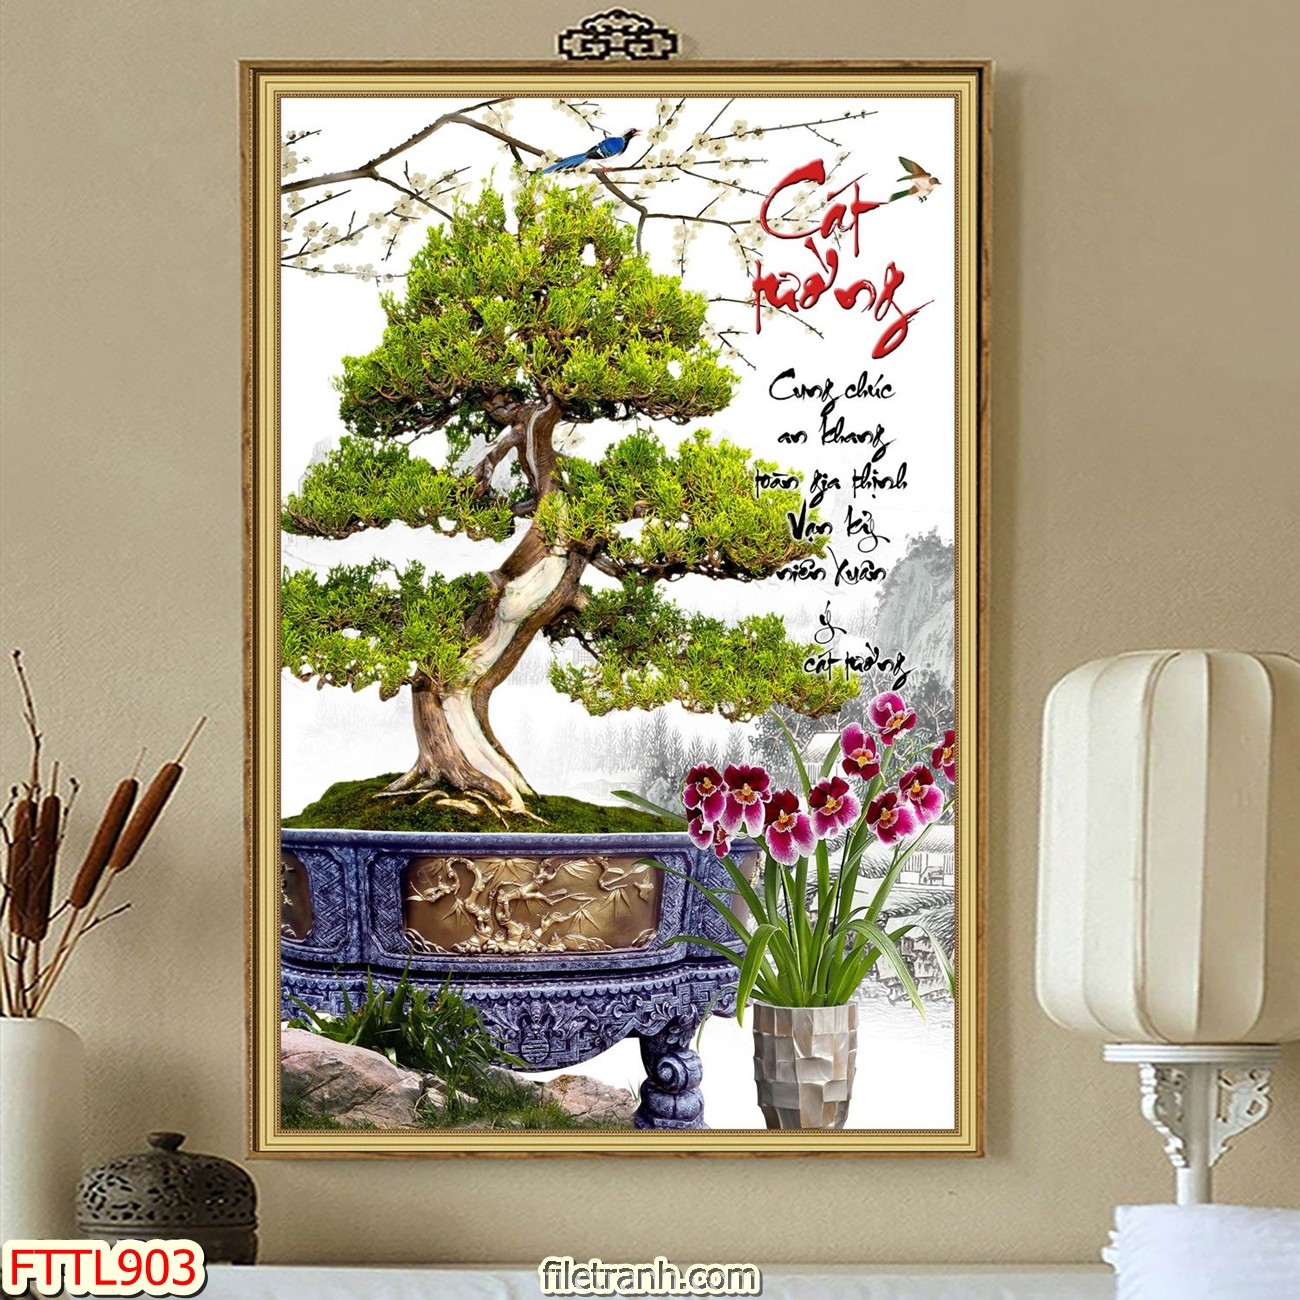 http://filetranh.com/file-tranh-chau-mai-bonsai/file-tranh-chau-mai-bonsai-fttl903.html